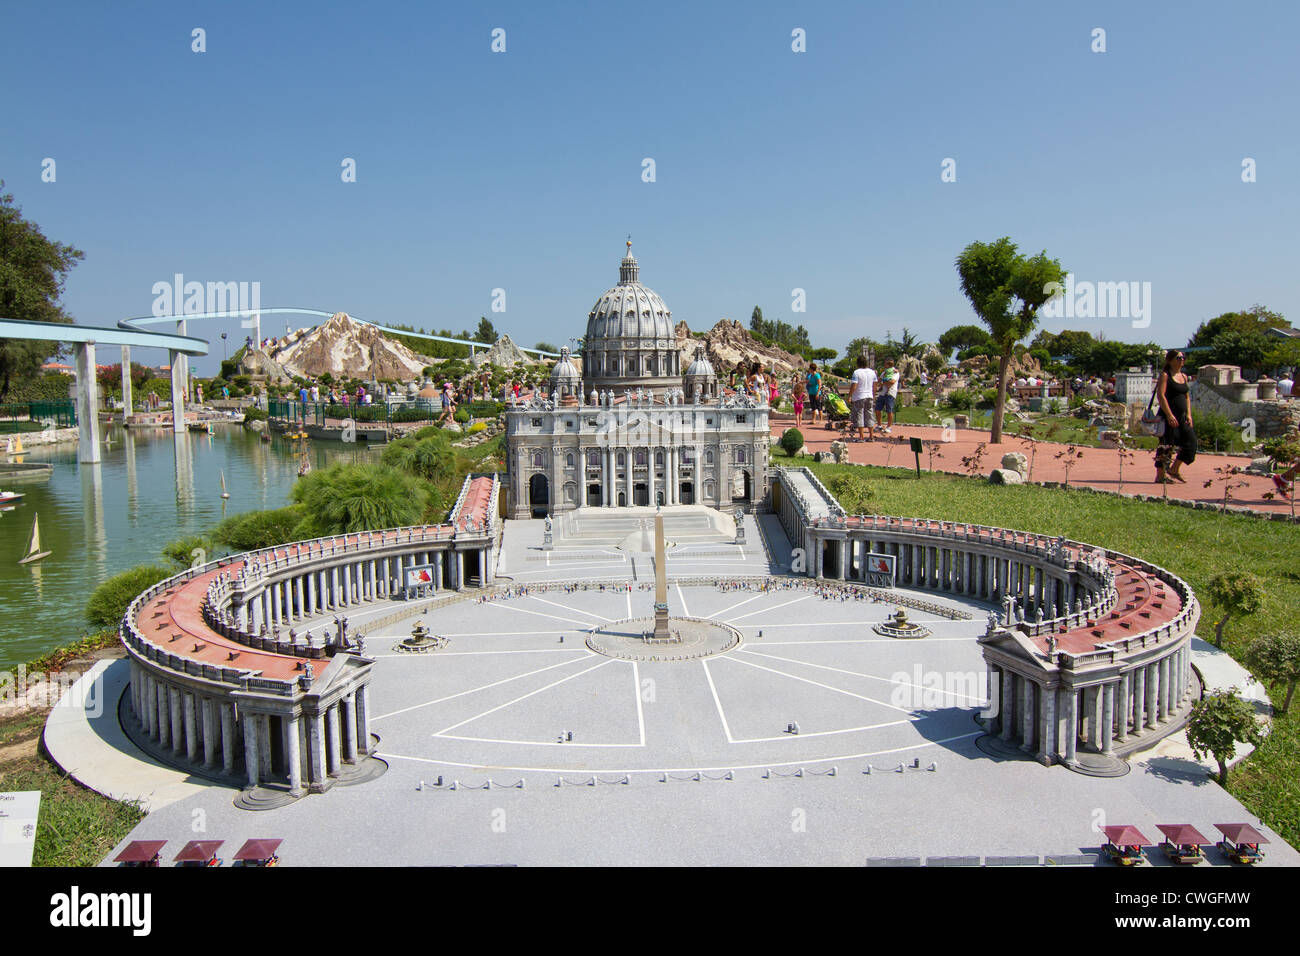 Model of the Vatican in the Italian them park Italy in Miniature near Rimini Stock Photo